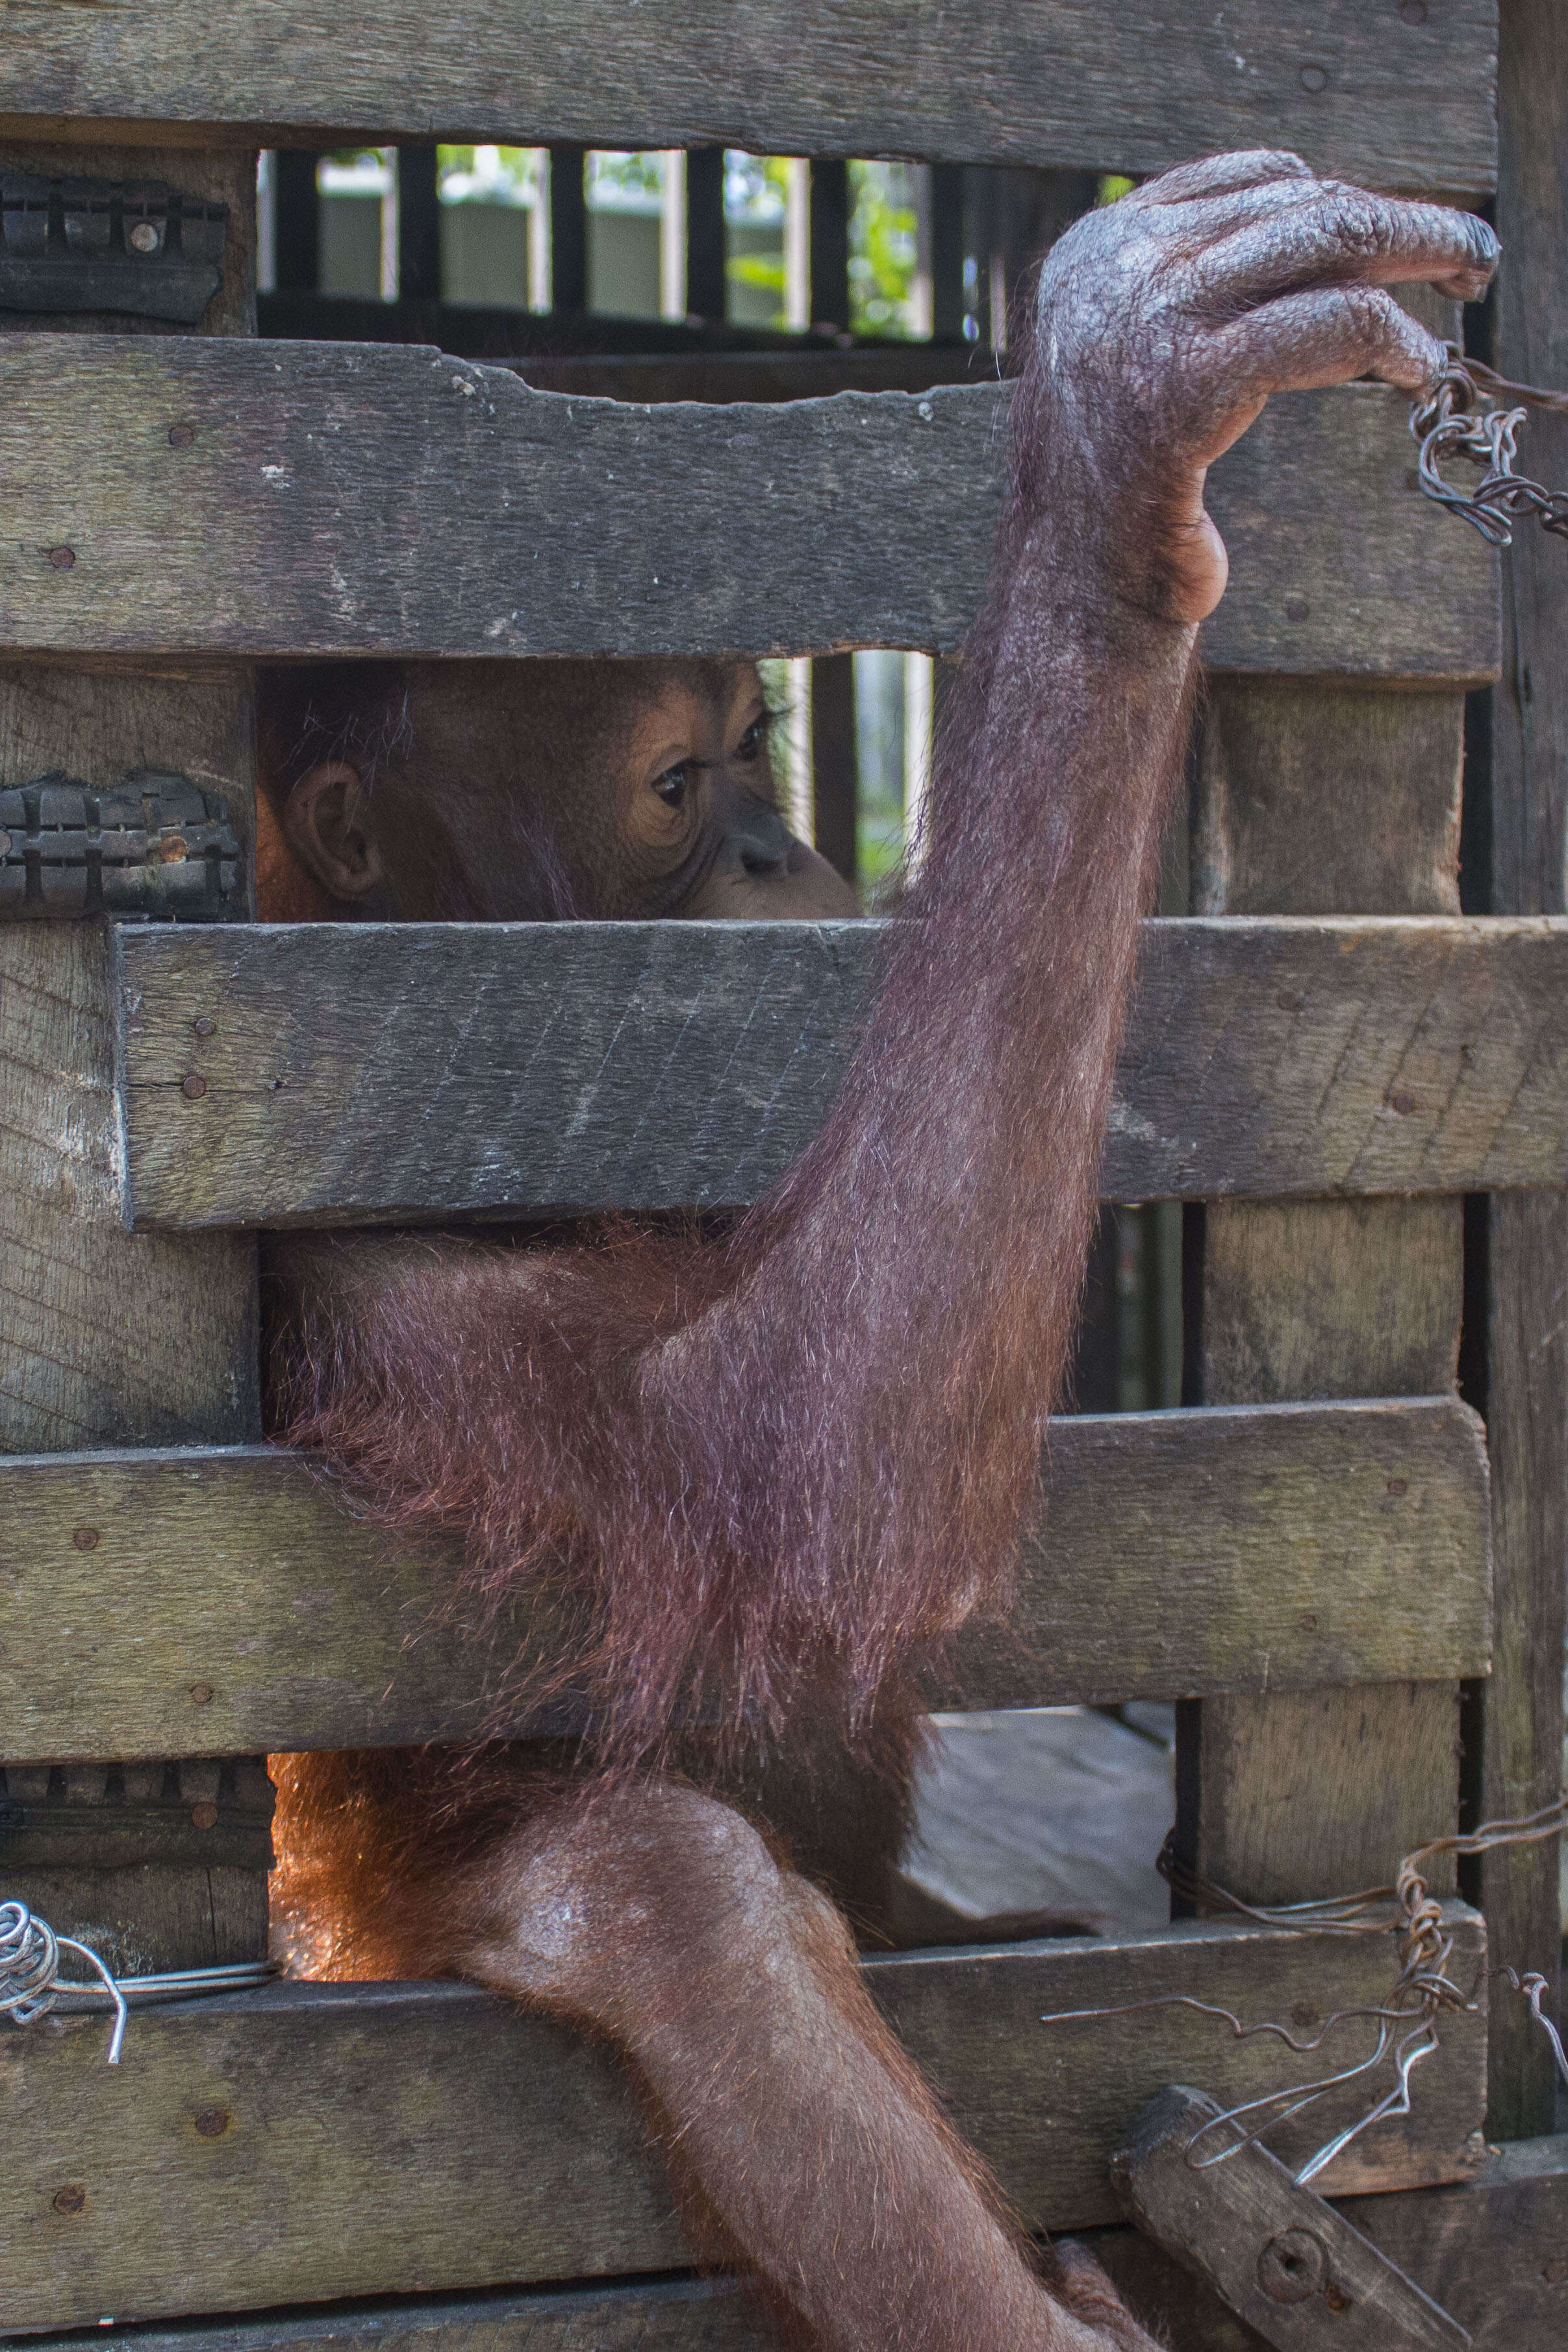 Baby orangutan locked up in wooden cage